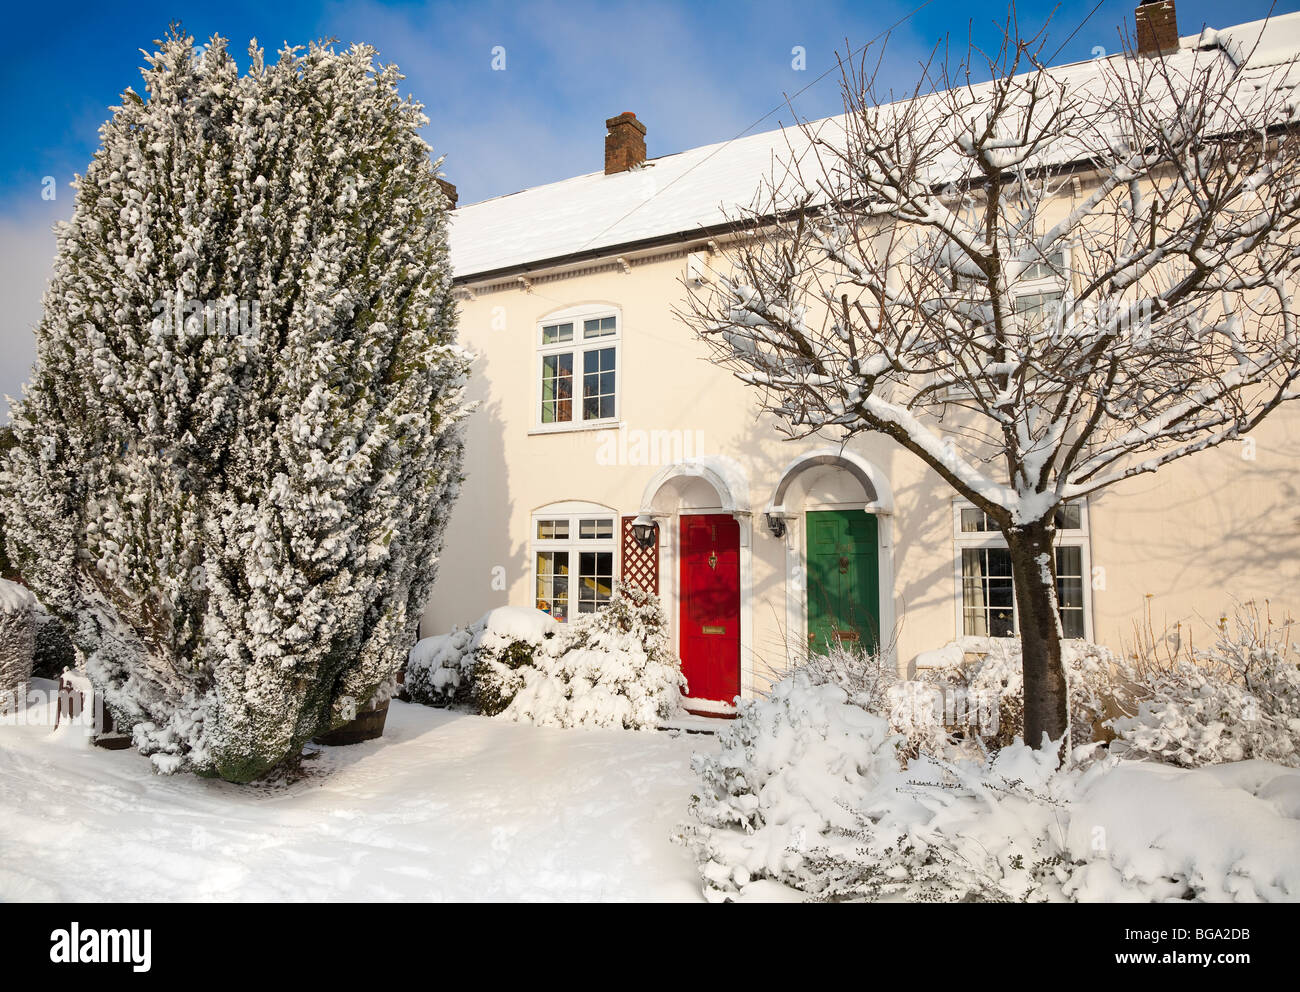 Picturesque village snow scene, Bedfordshire UK, colourful doors, warm winter sun. Stock Photo